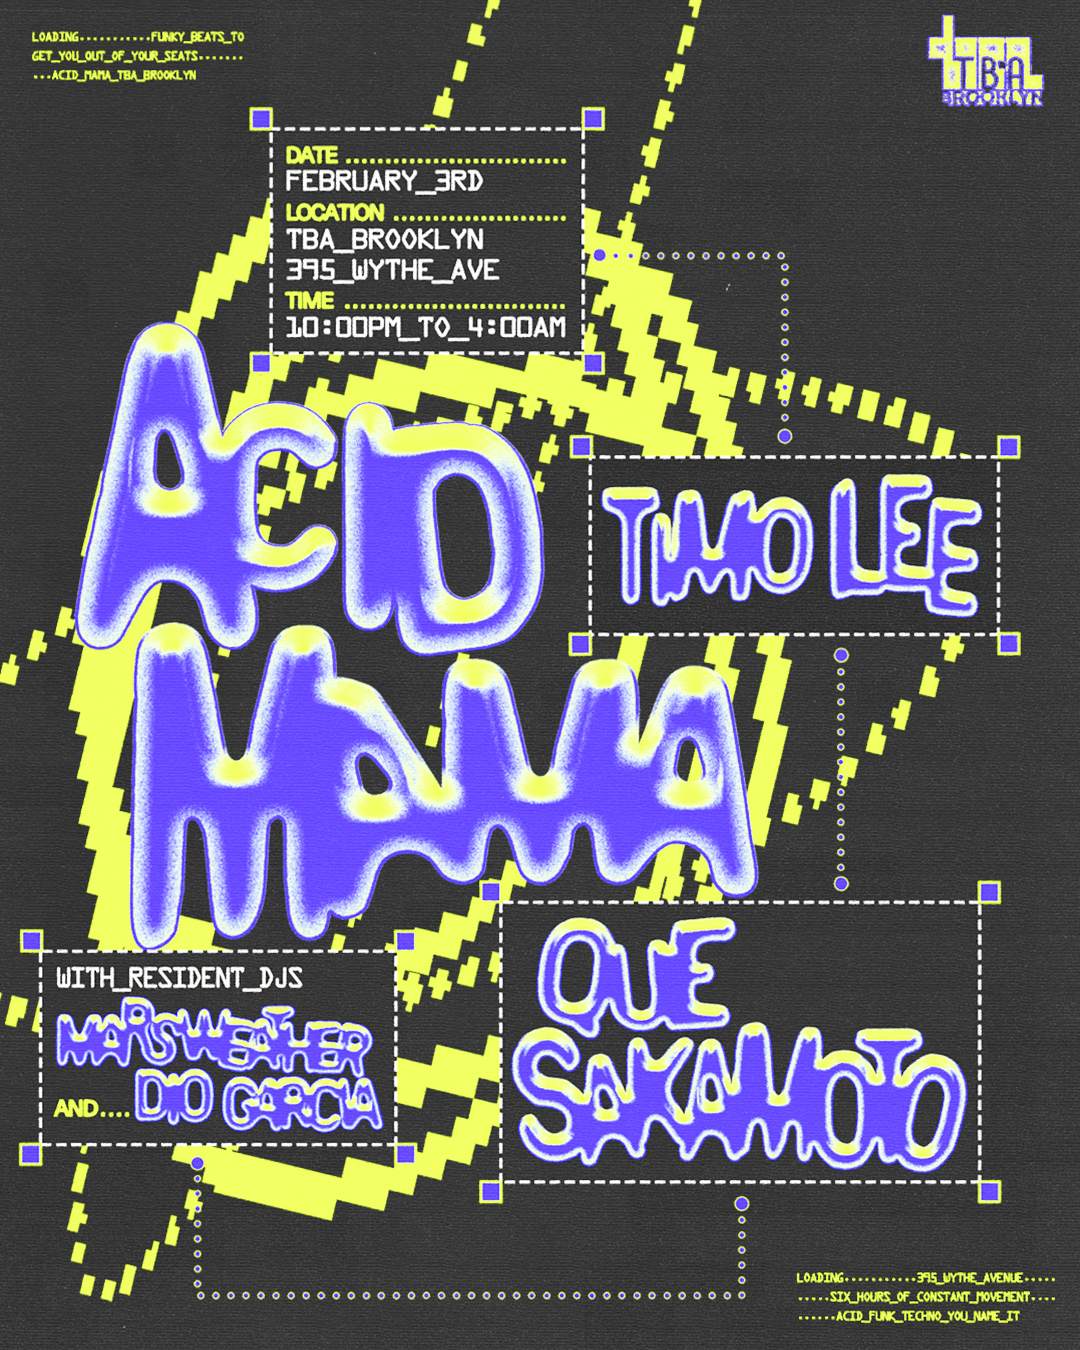 Acid Mama: Que Sakamoto, Timo Lee, Dio Garcia, Marsweather - フライヤー表